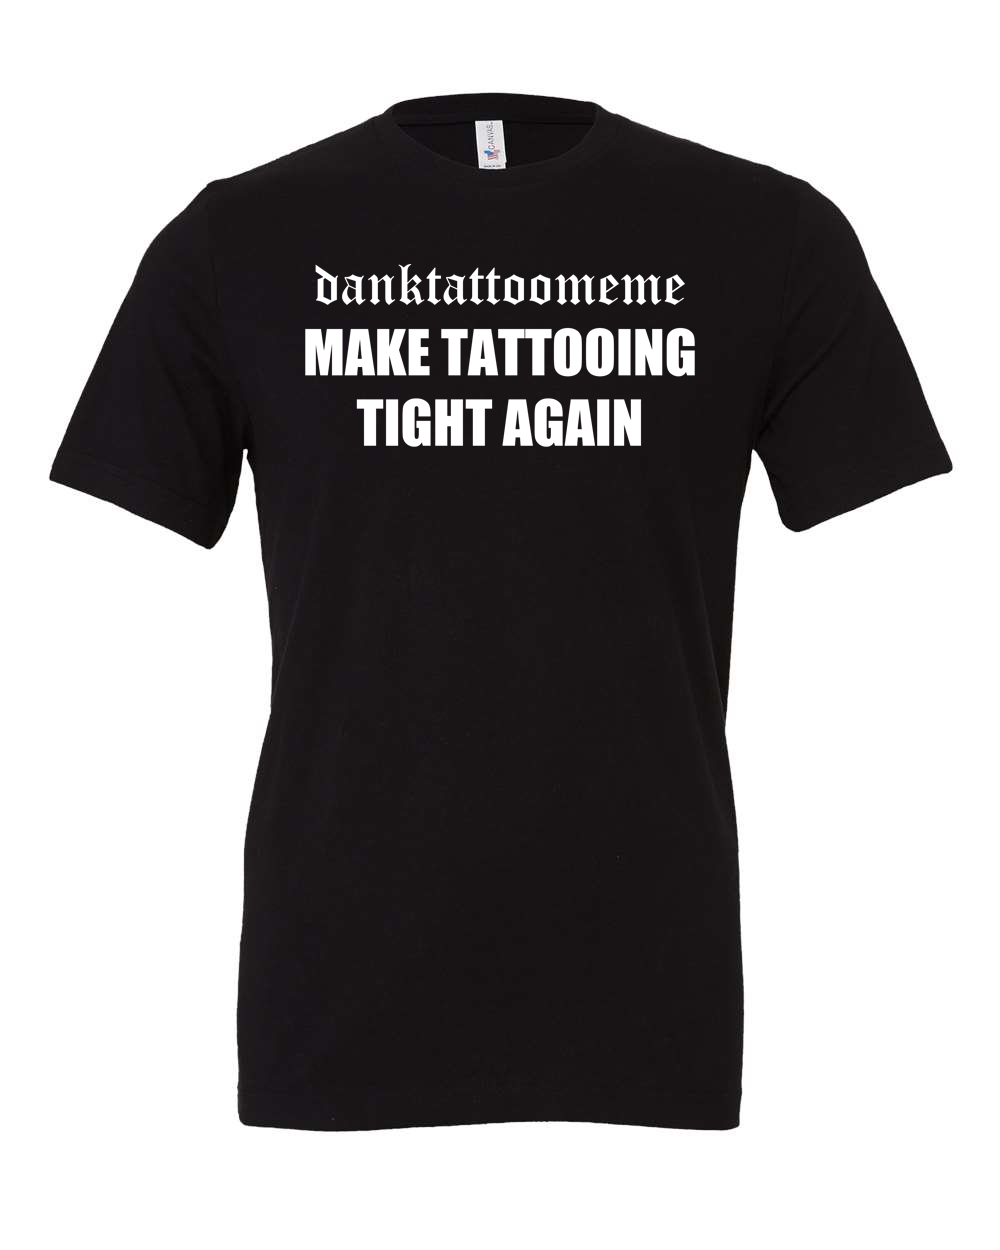 Danktattoomeme “Make Tattooing Tight Again” Unisex T-Shirt